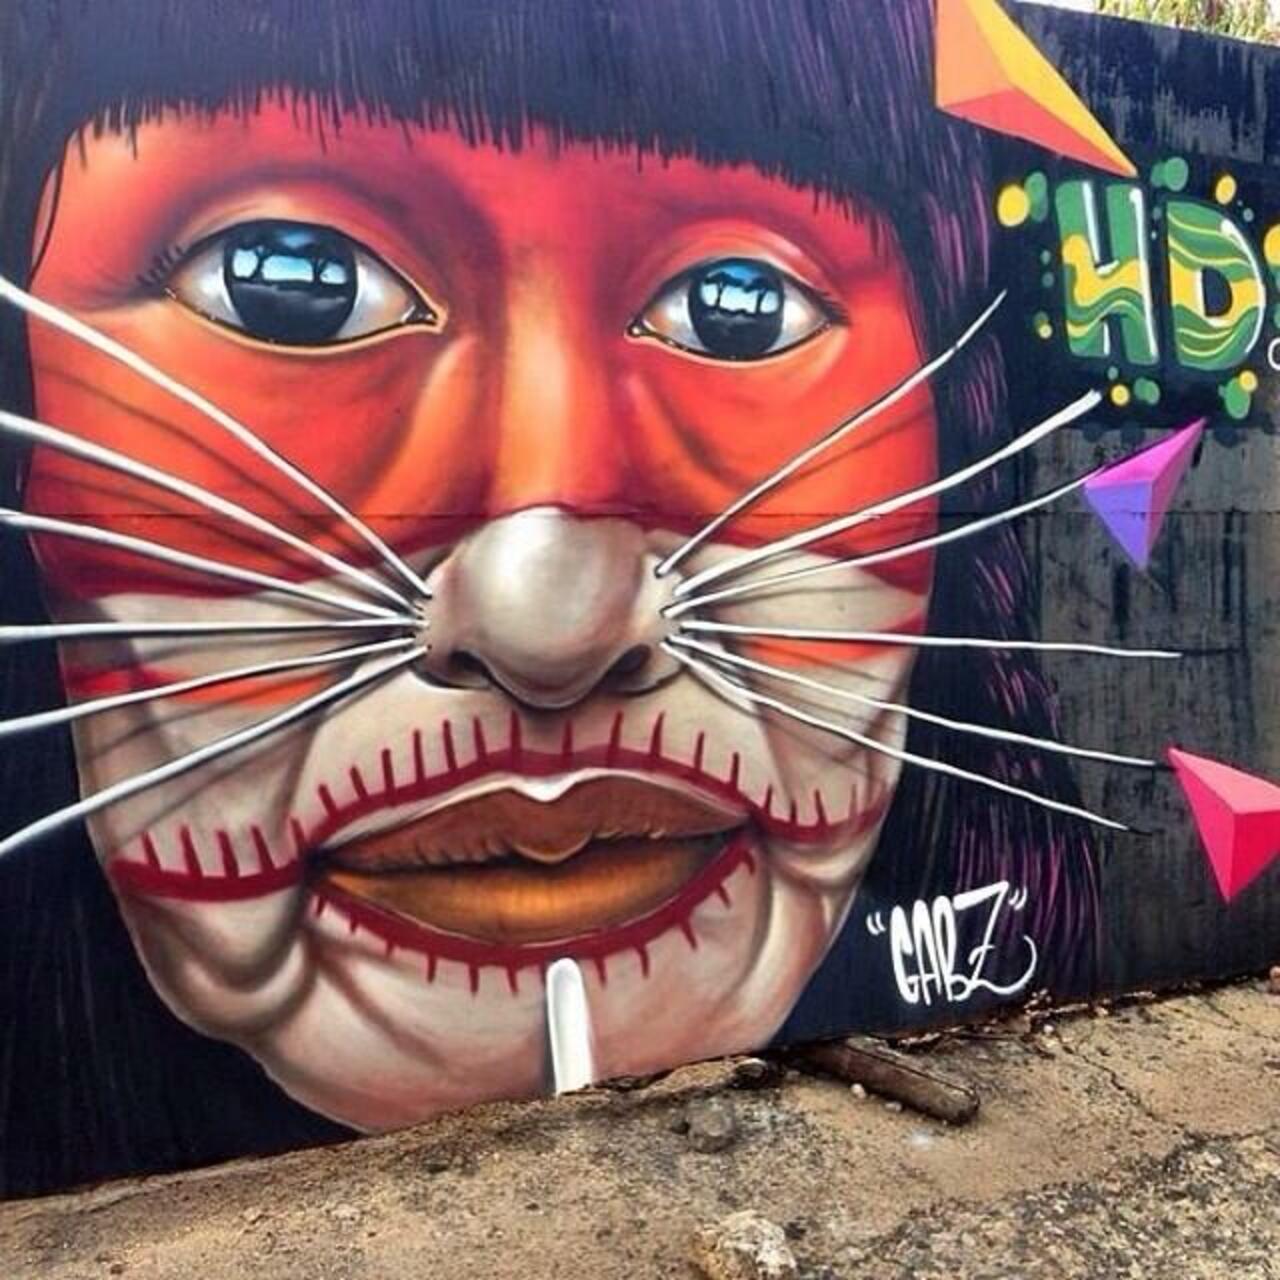 Artist Gabz Lpa Street Art wall portrait in Santo Domingo, Dominican Republic #art #graffiti #mural #streetart http://t.co/ElY0QdFOKV"